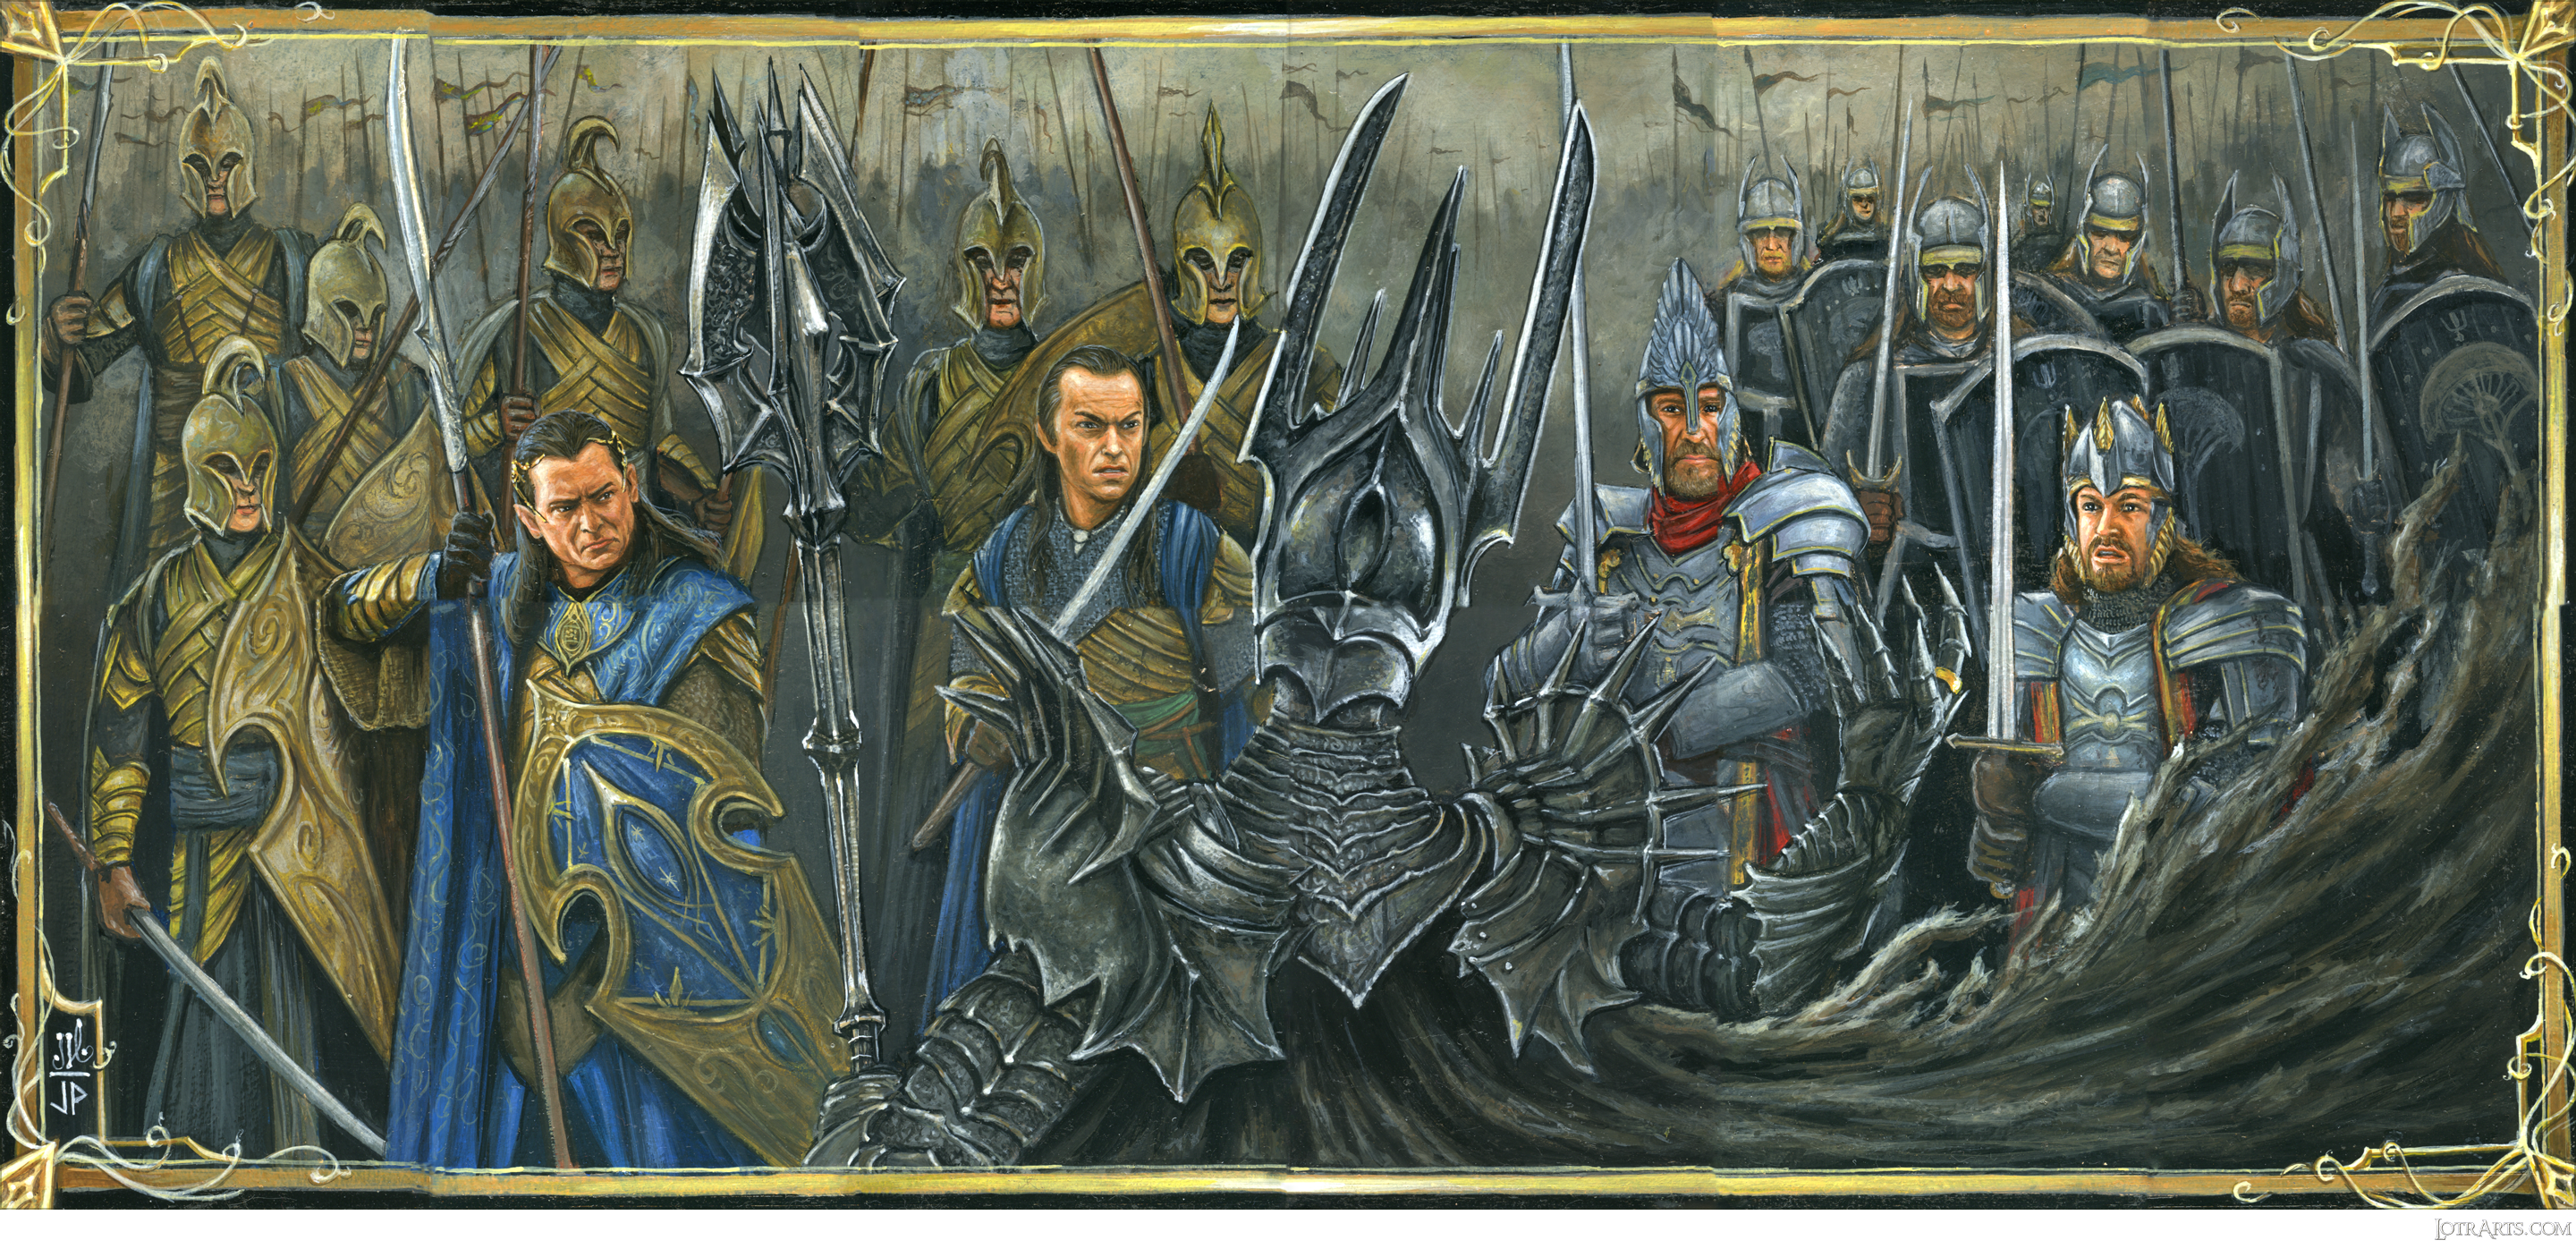 Twelve-card panel of the Last Alliance battling Sauron by Potratz and Hai<span class="ngViews">8 views</span>